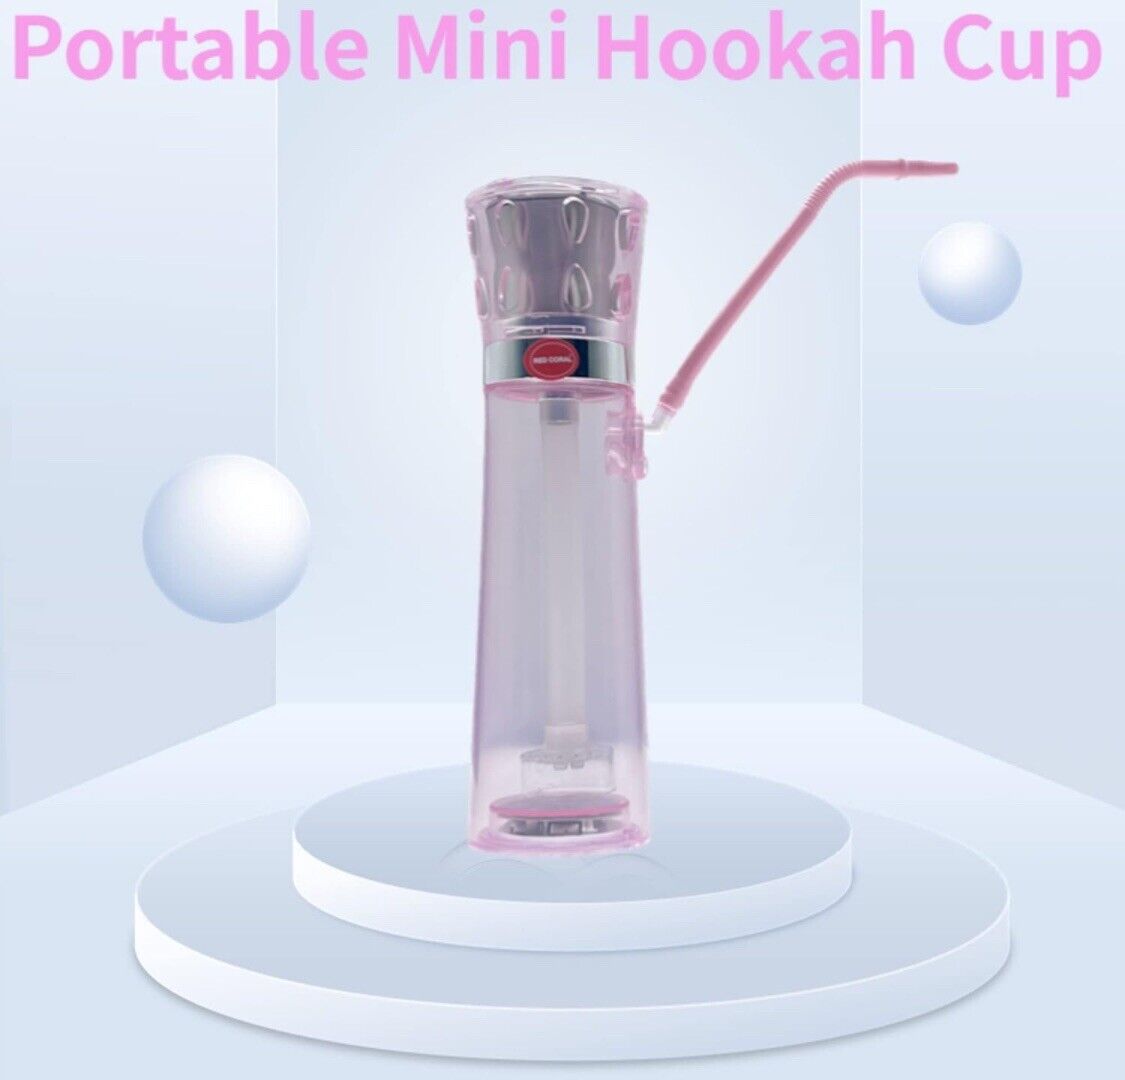 Mini Hookah Cup for Car Hookah Cup Travel Hookah Set Portable Travel Hookah Cup